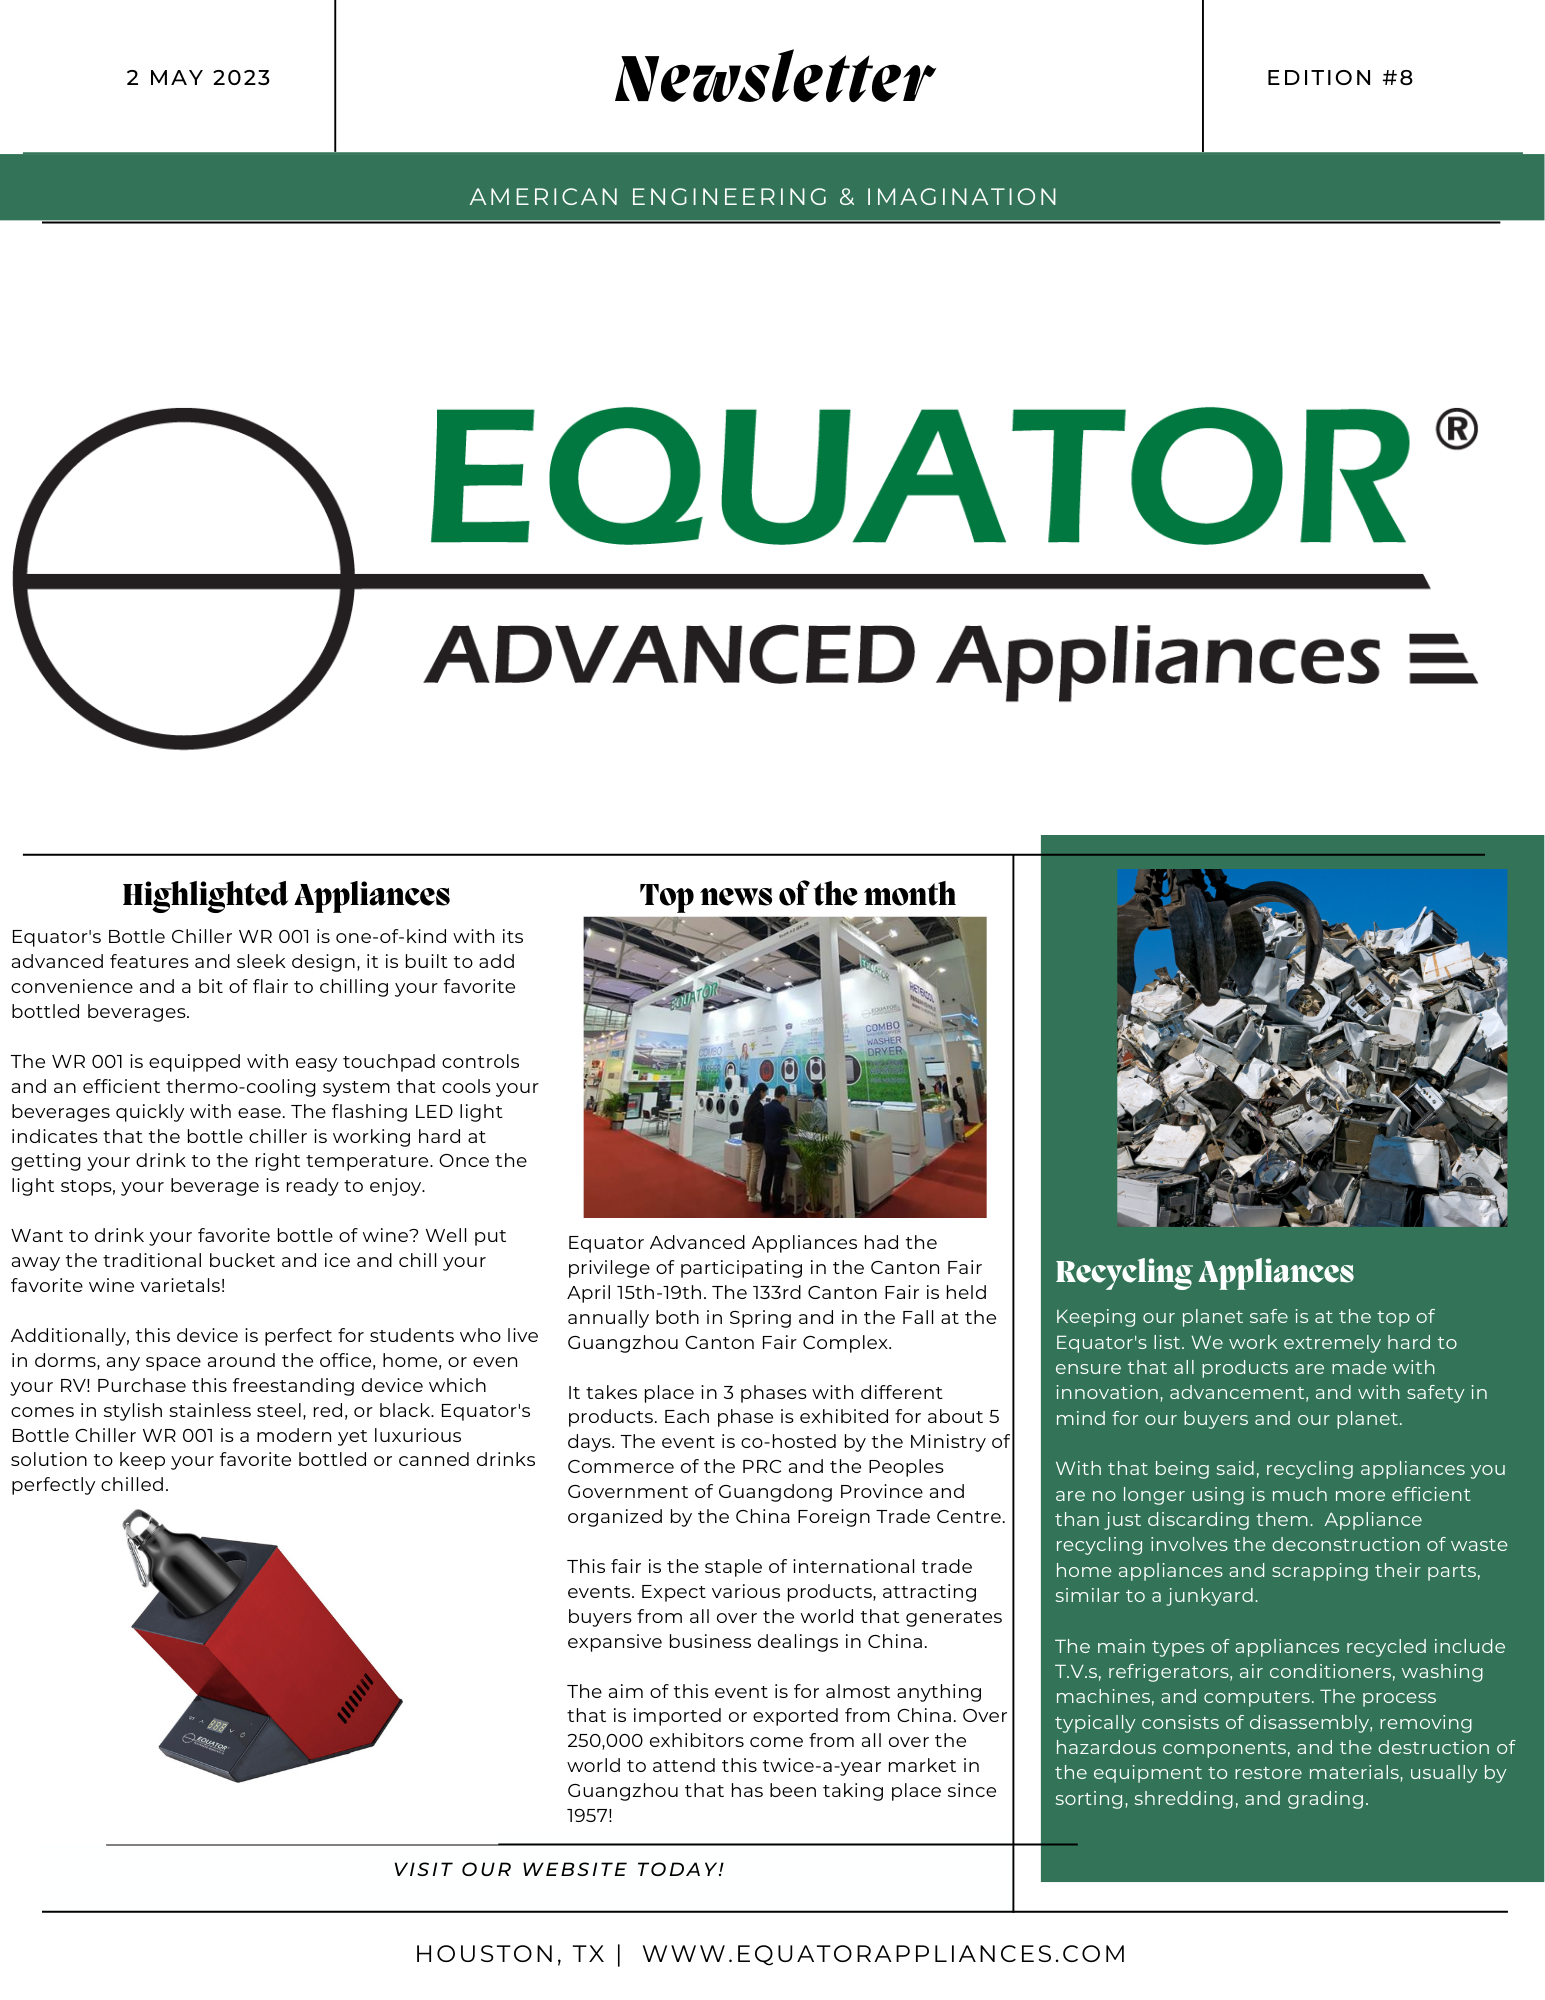 Equator Advanced Appliances 8th Edition Newsletter